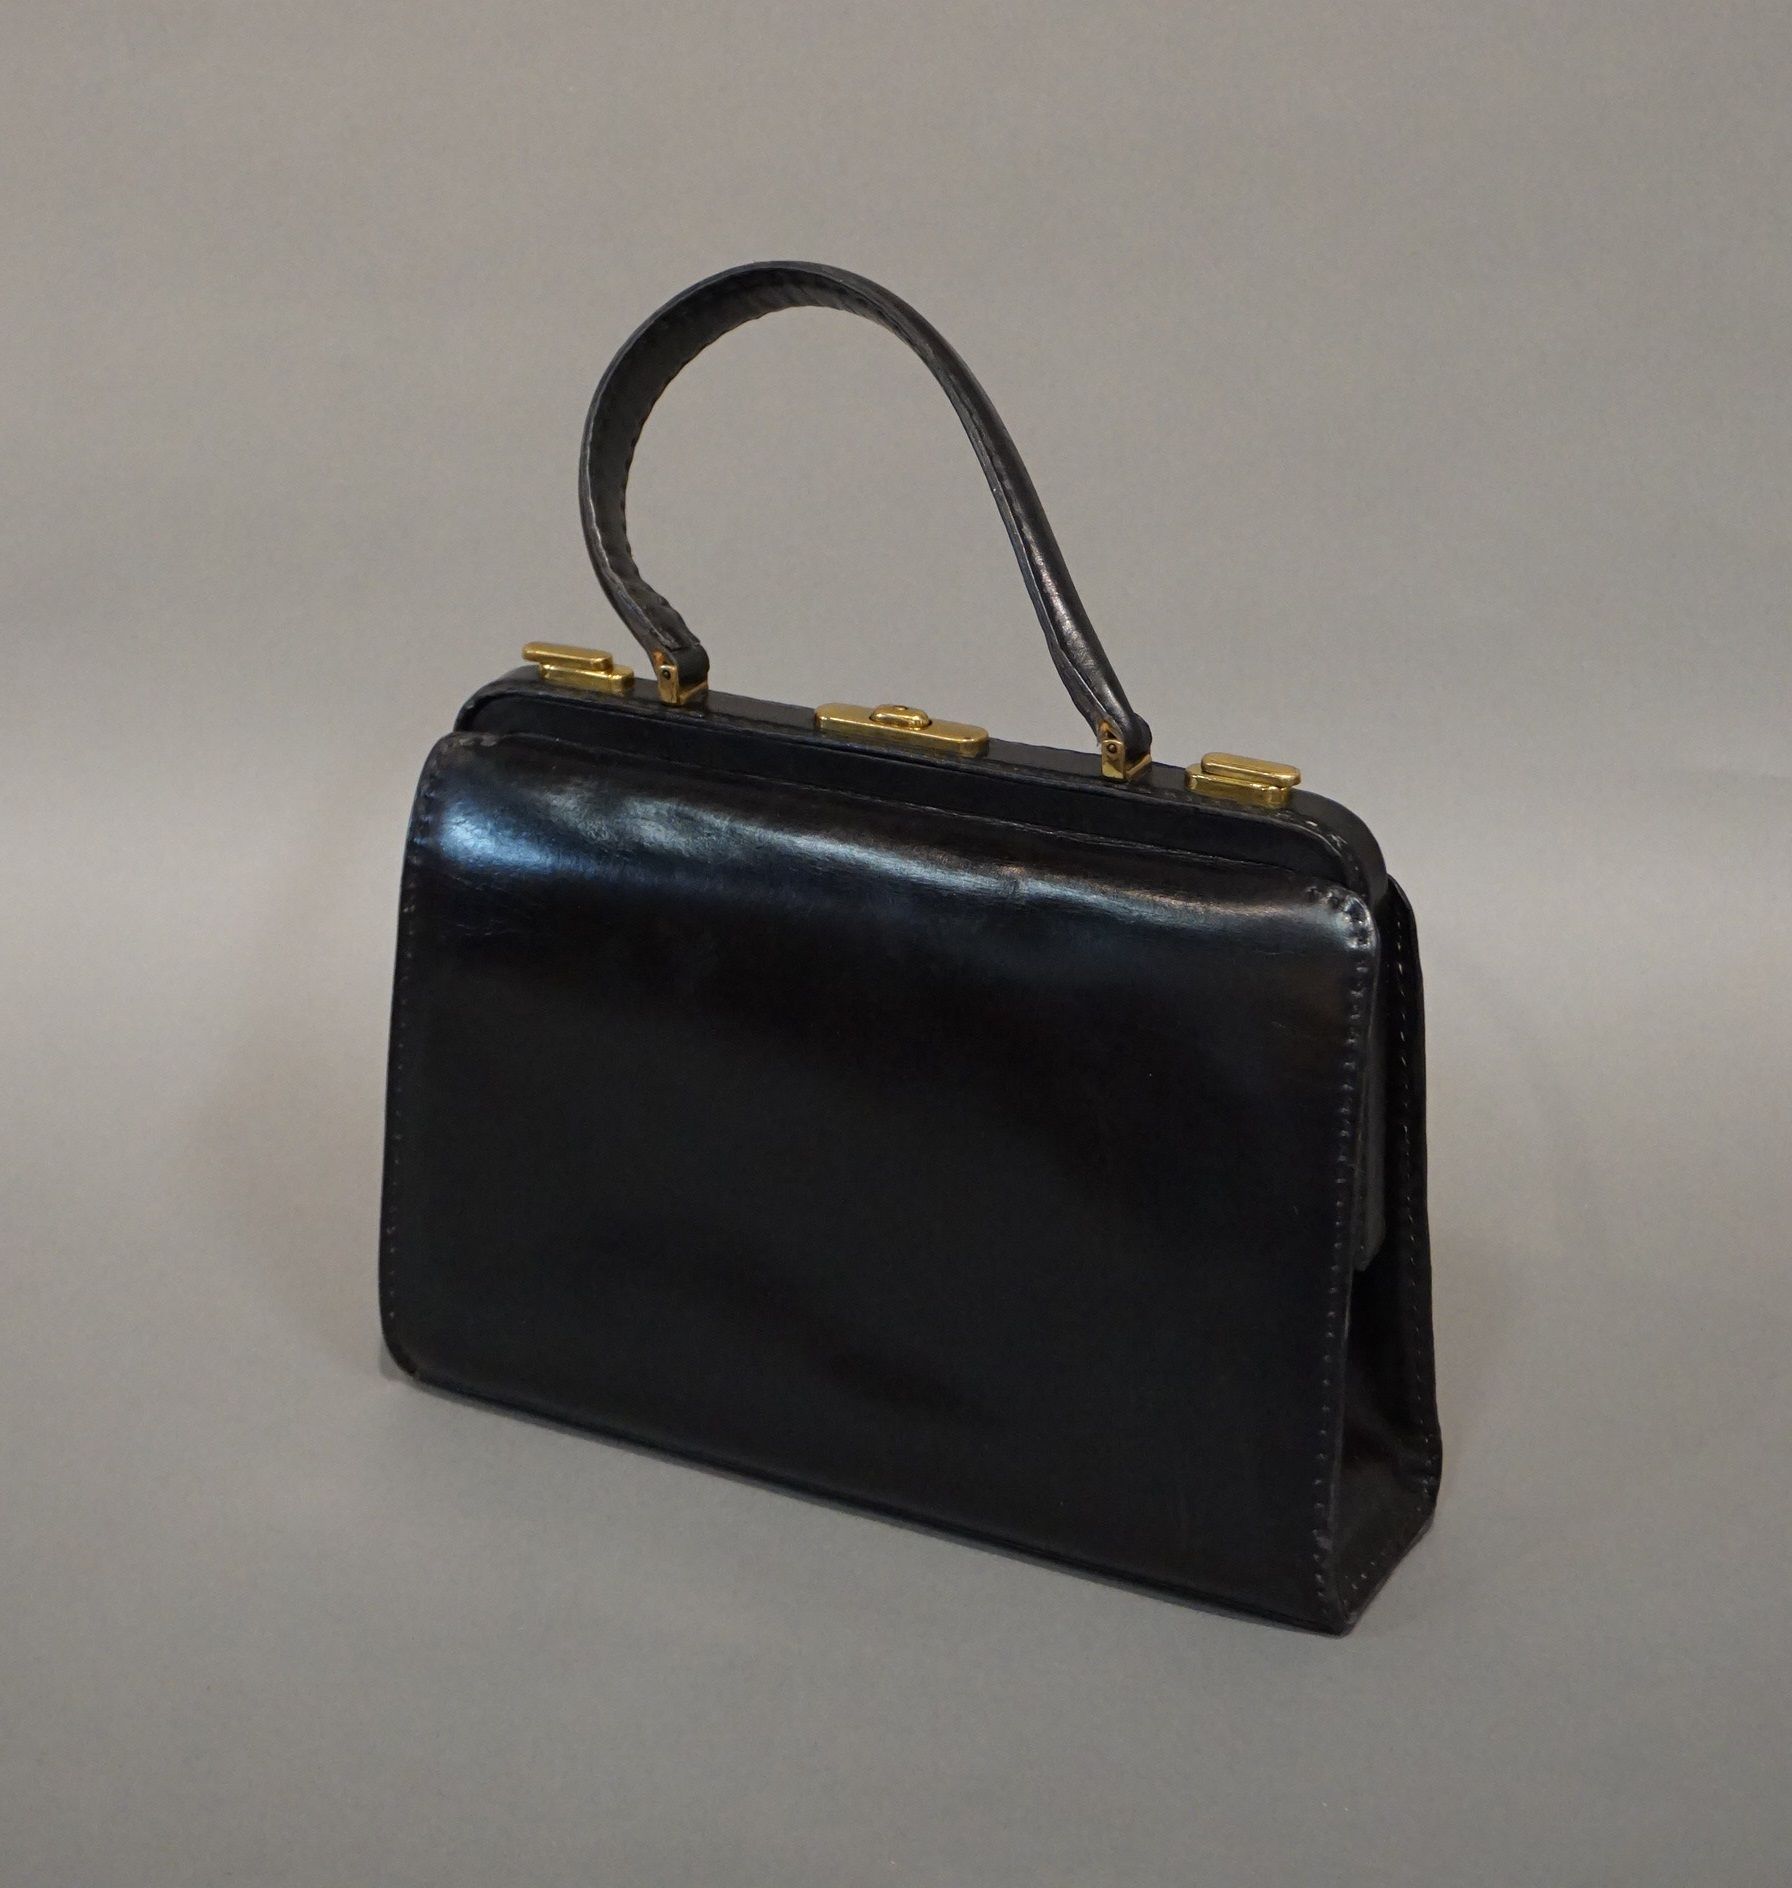 LANCEL Black leather handbag (wear). 22x29 cm